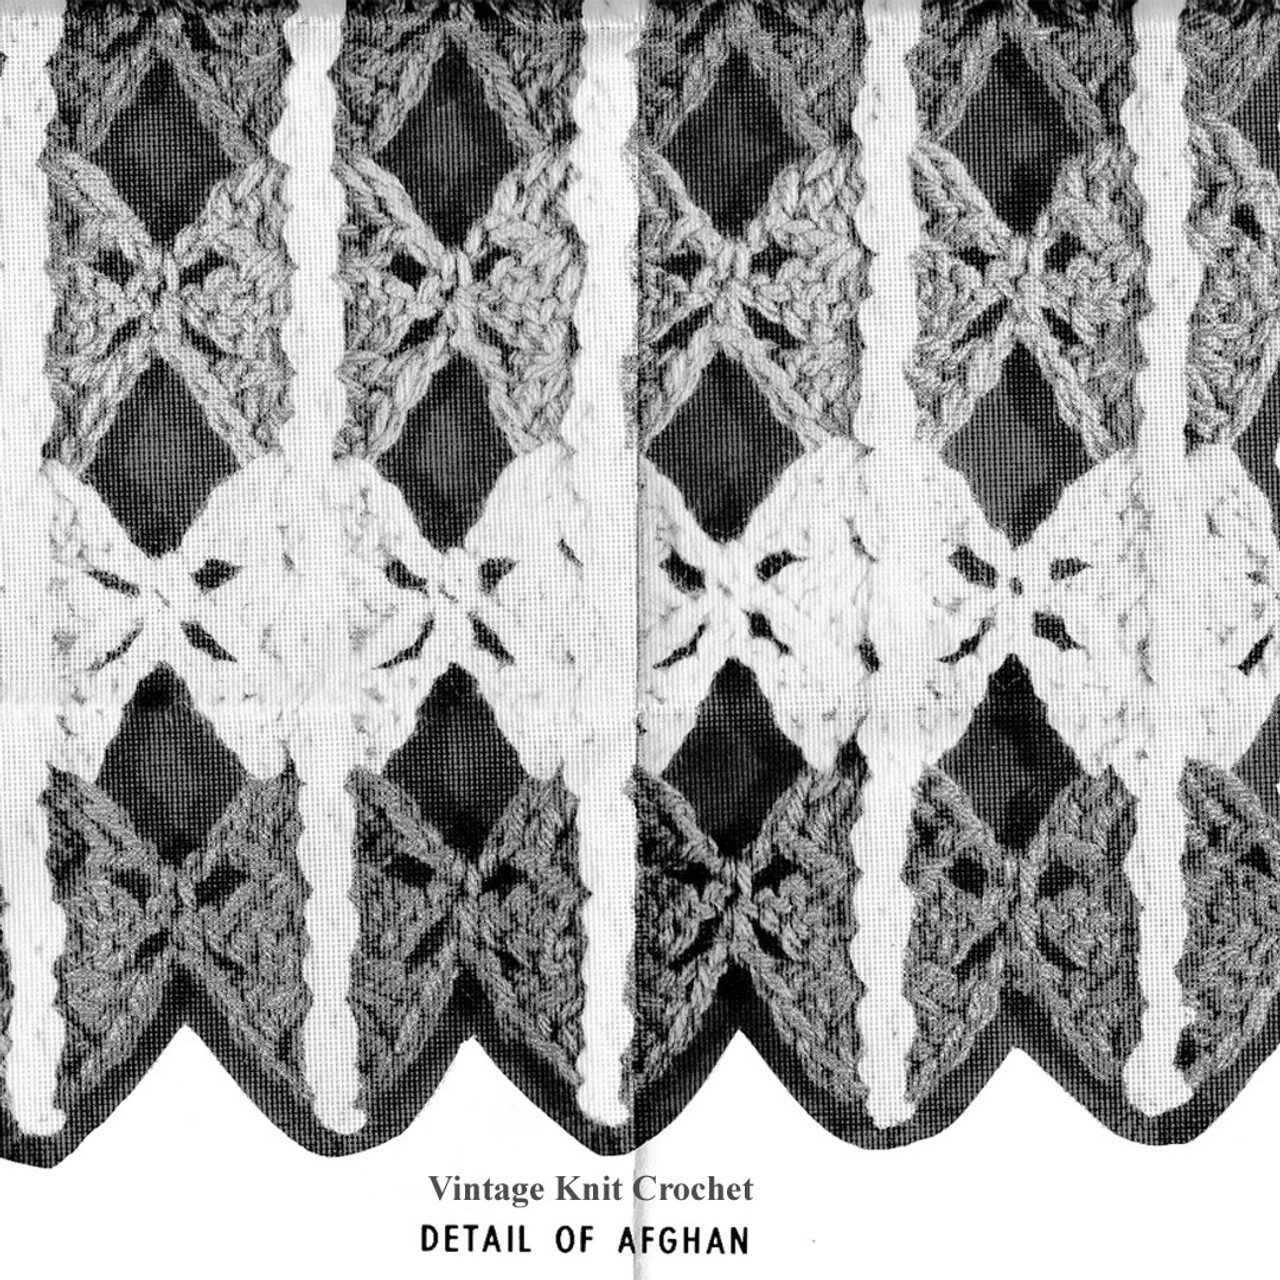 crocheted shell afghan pattern stitch illustration